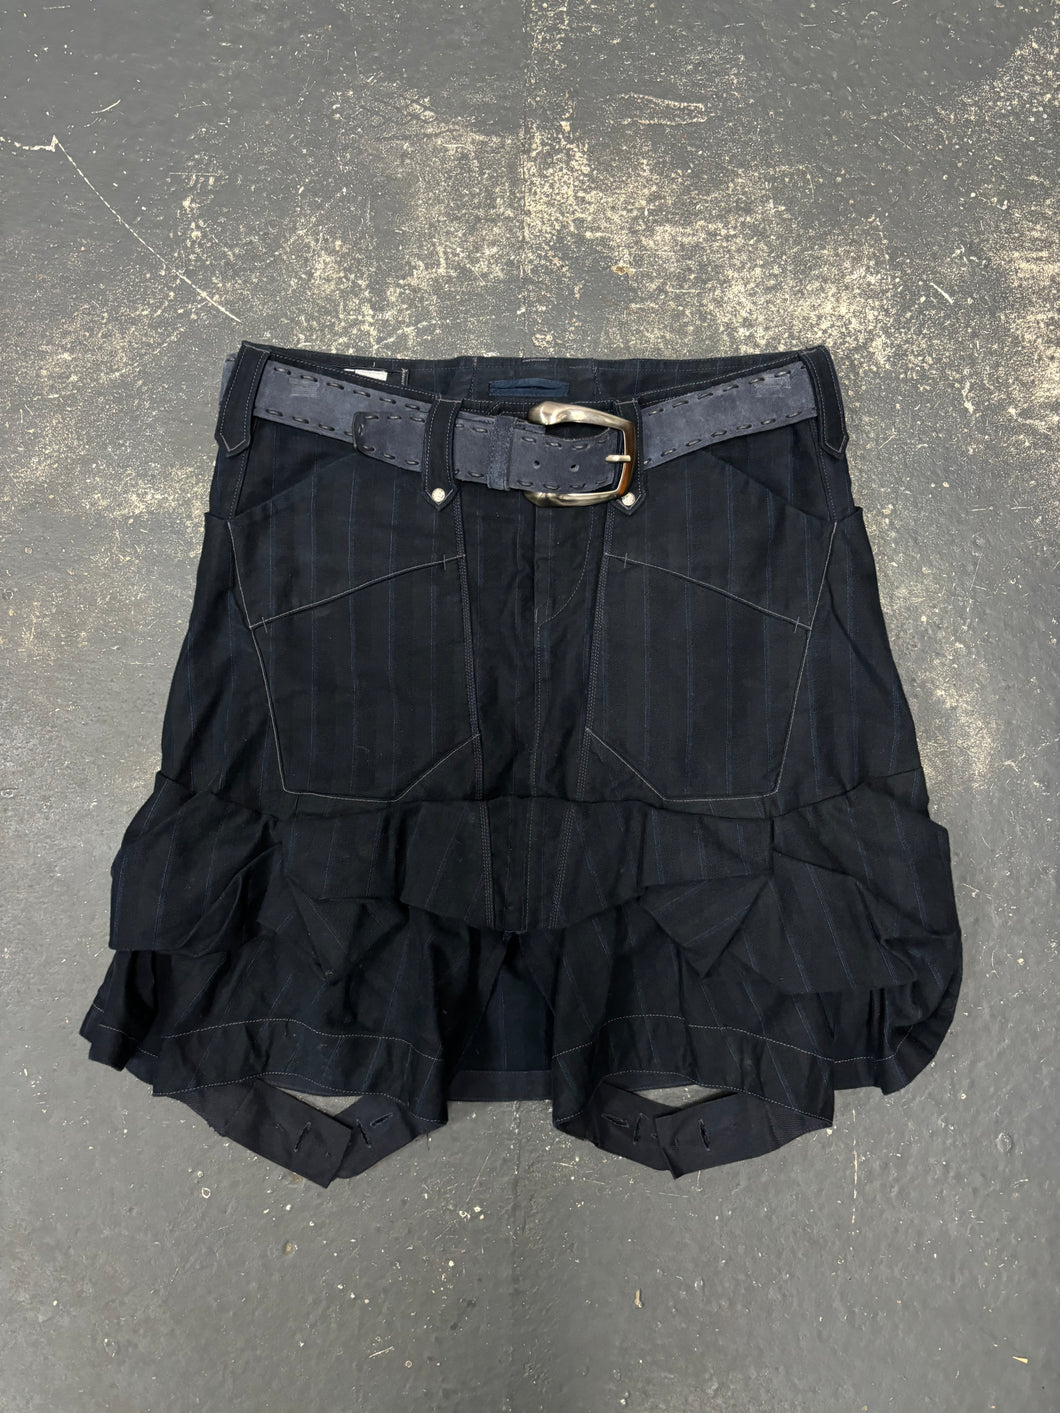 Marithe Francois Girbaud Skirt Pants Hybrid (38)